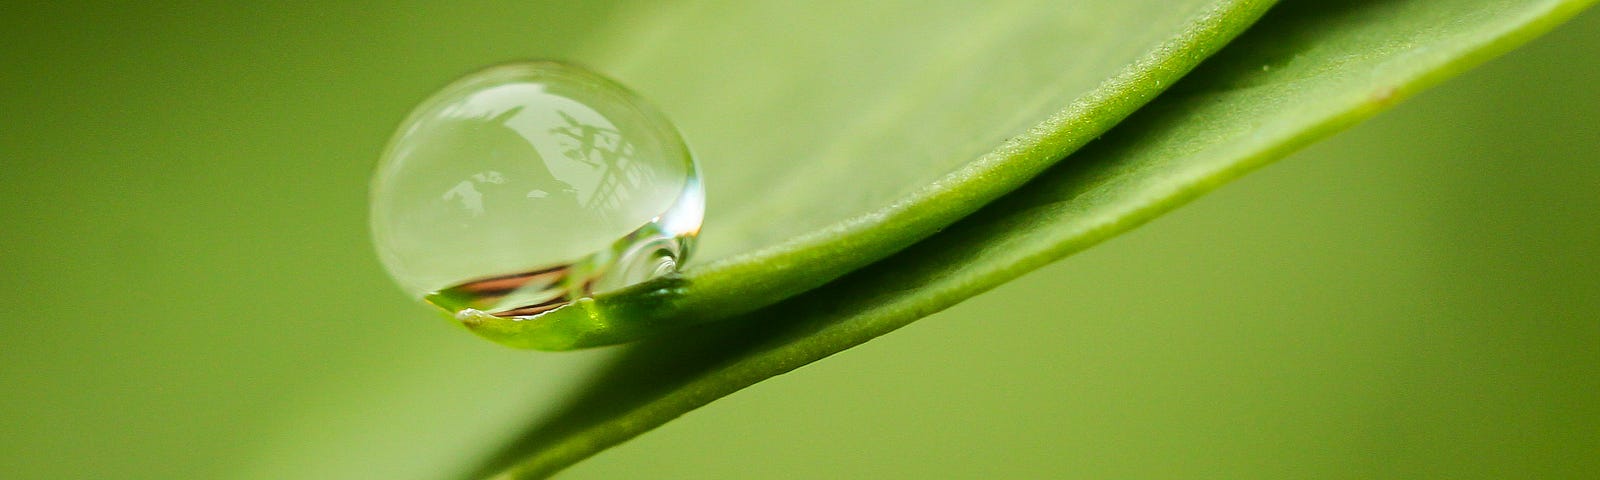 A water dew drop on a leaf